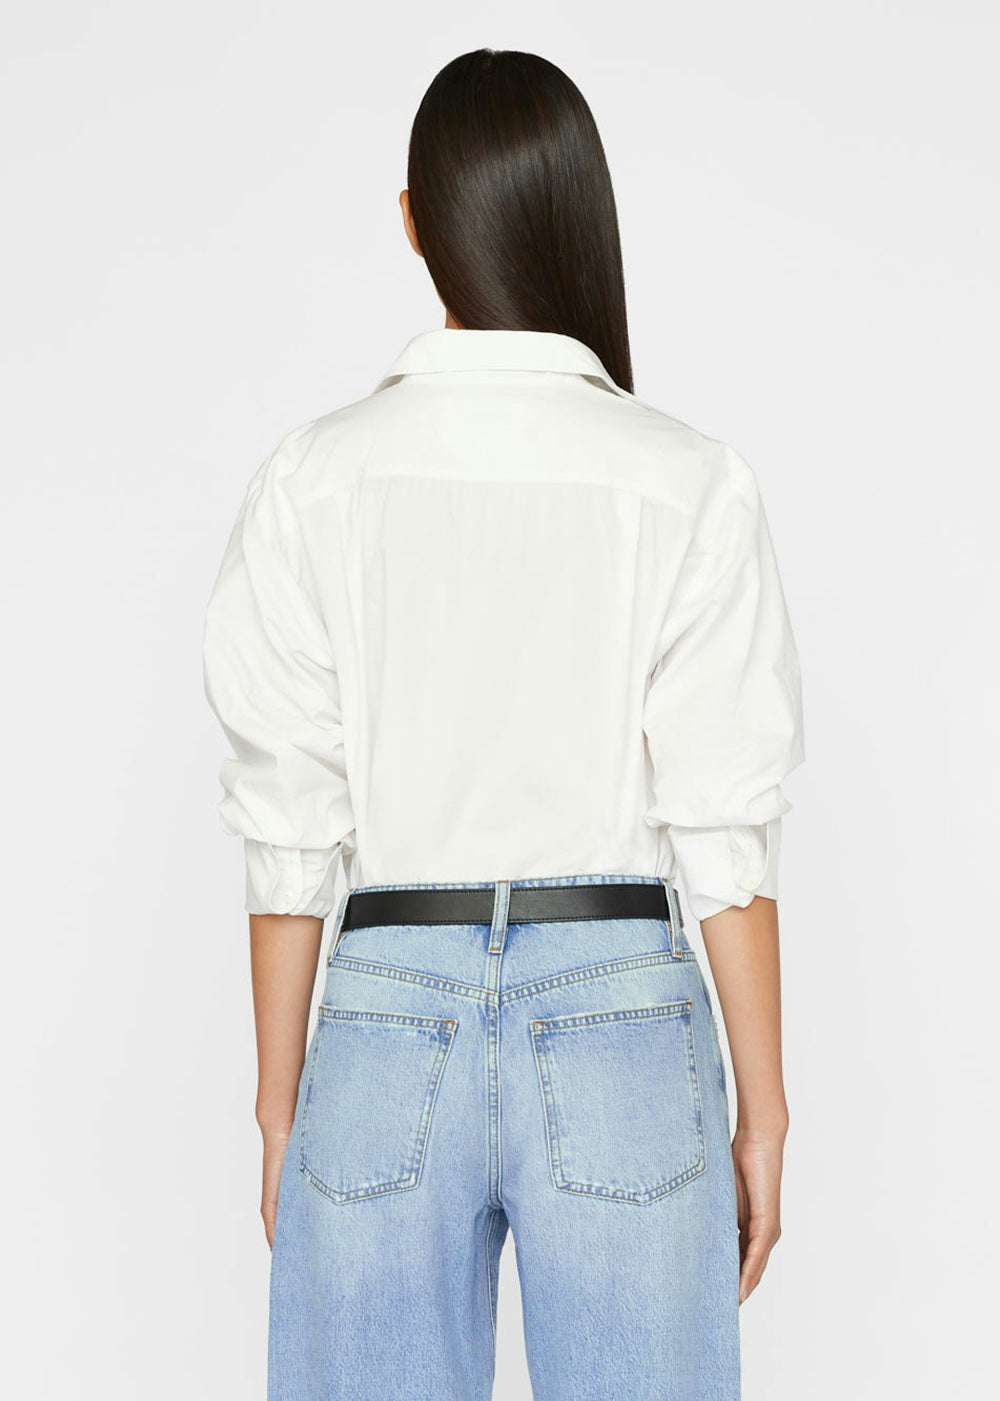 The Oversized Shirt - White - Frame Denim Canada - Danali - LWSH2378-BLAN